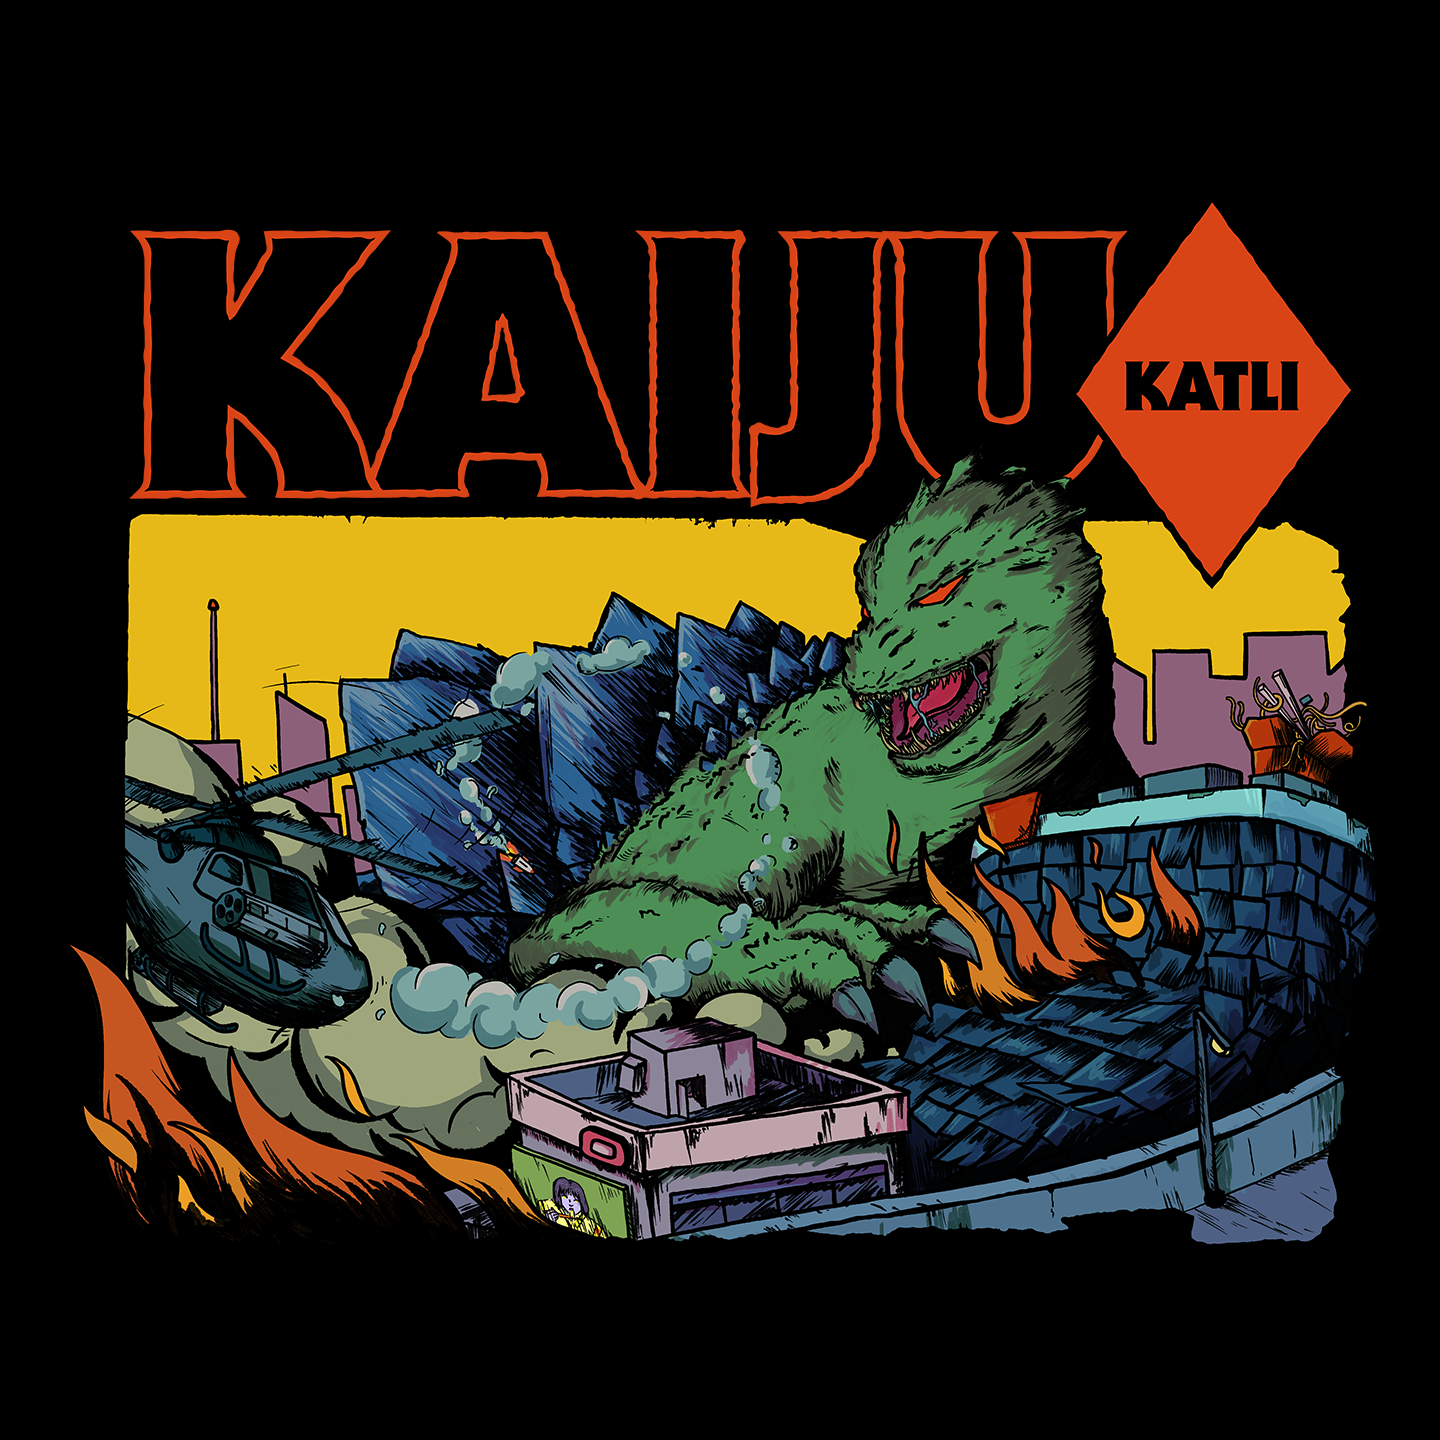 Kaiju Katli